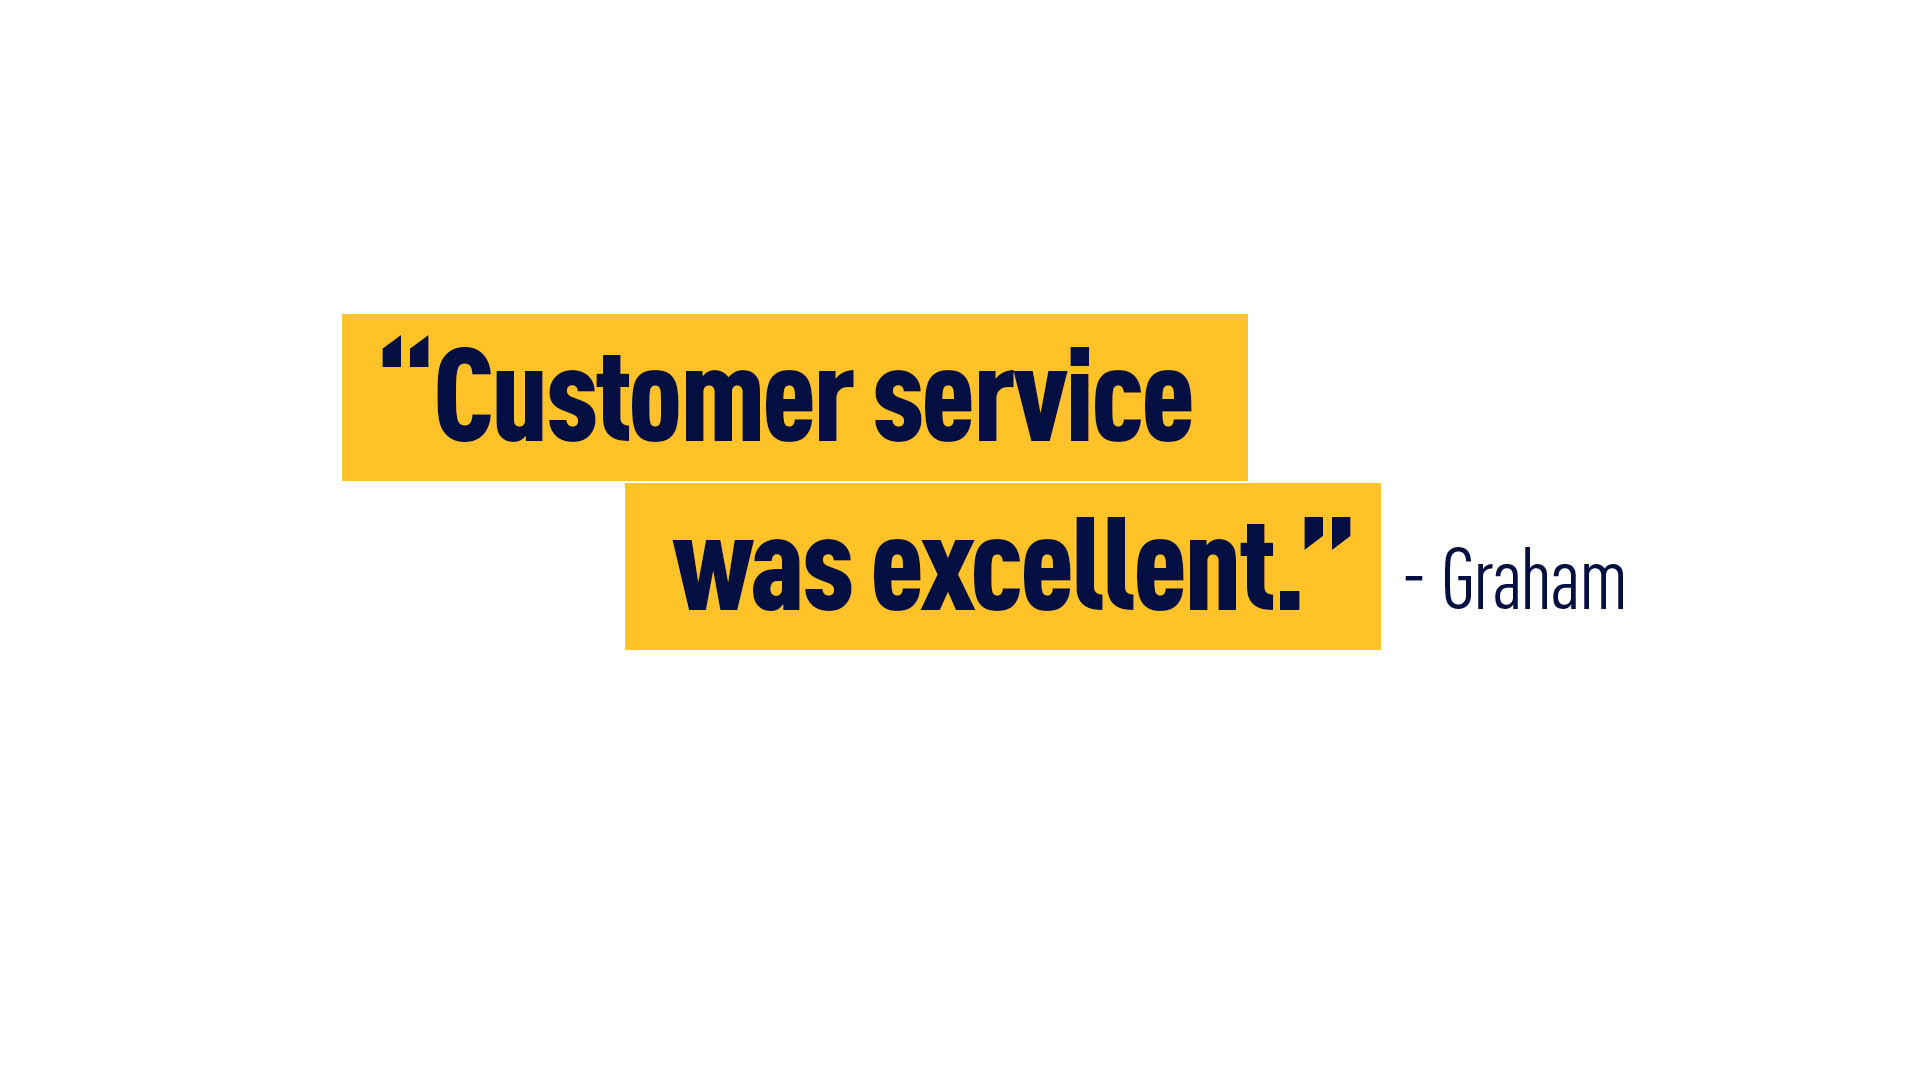 “Customer service was excellent.” - Graham